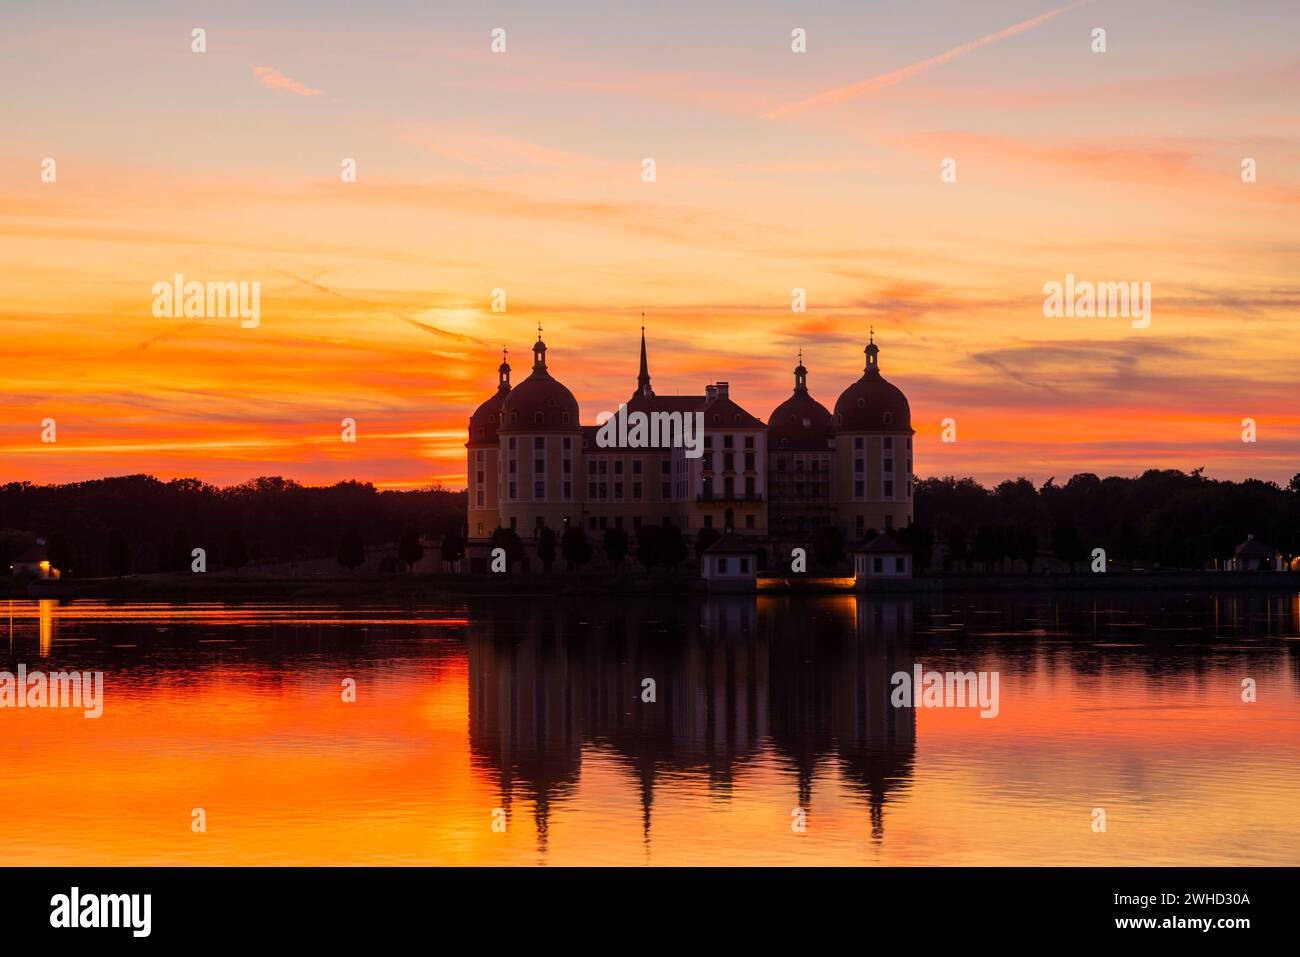 Evening atmosphere at the Fasanenschloesschen, Moritzburg, Saxony, Germany Stock Photo